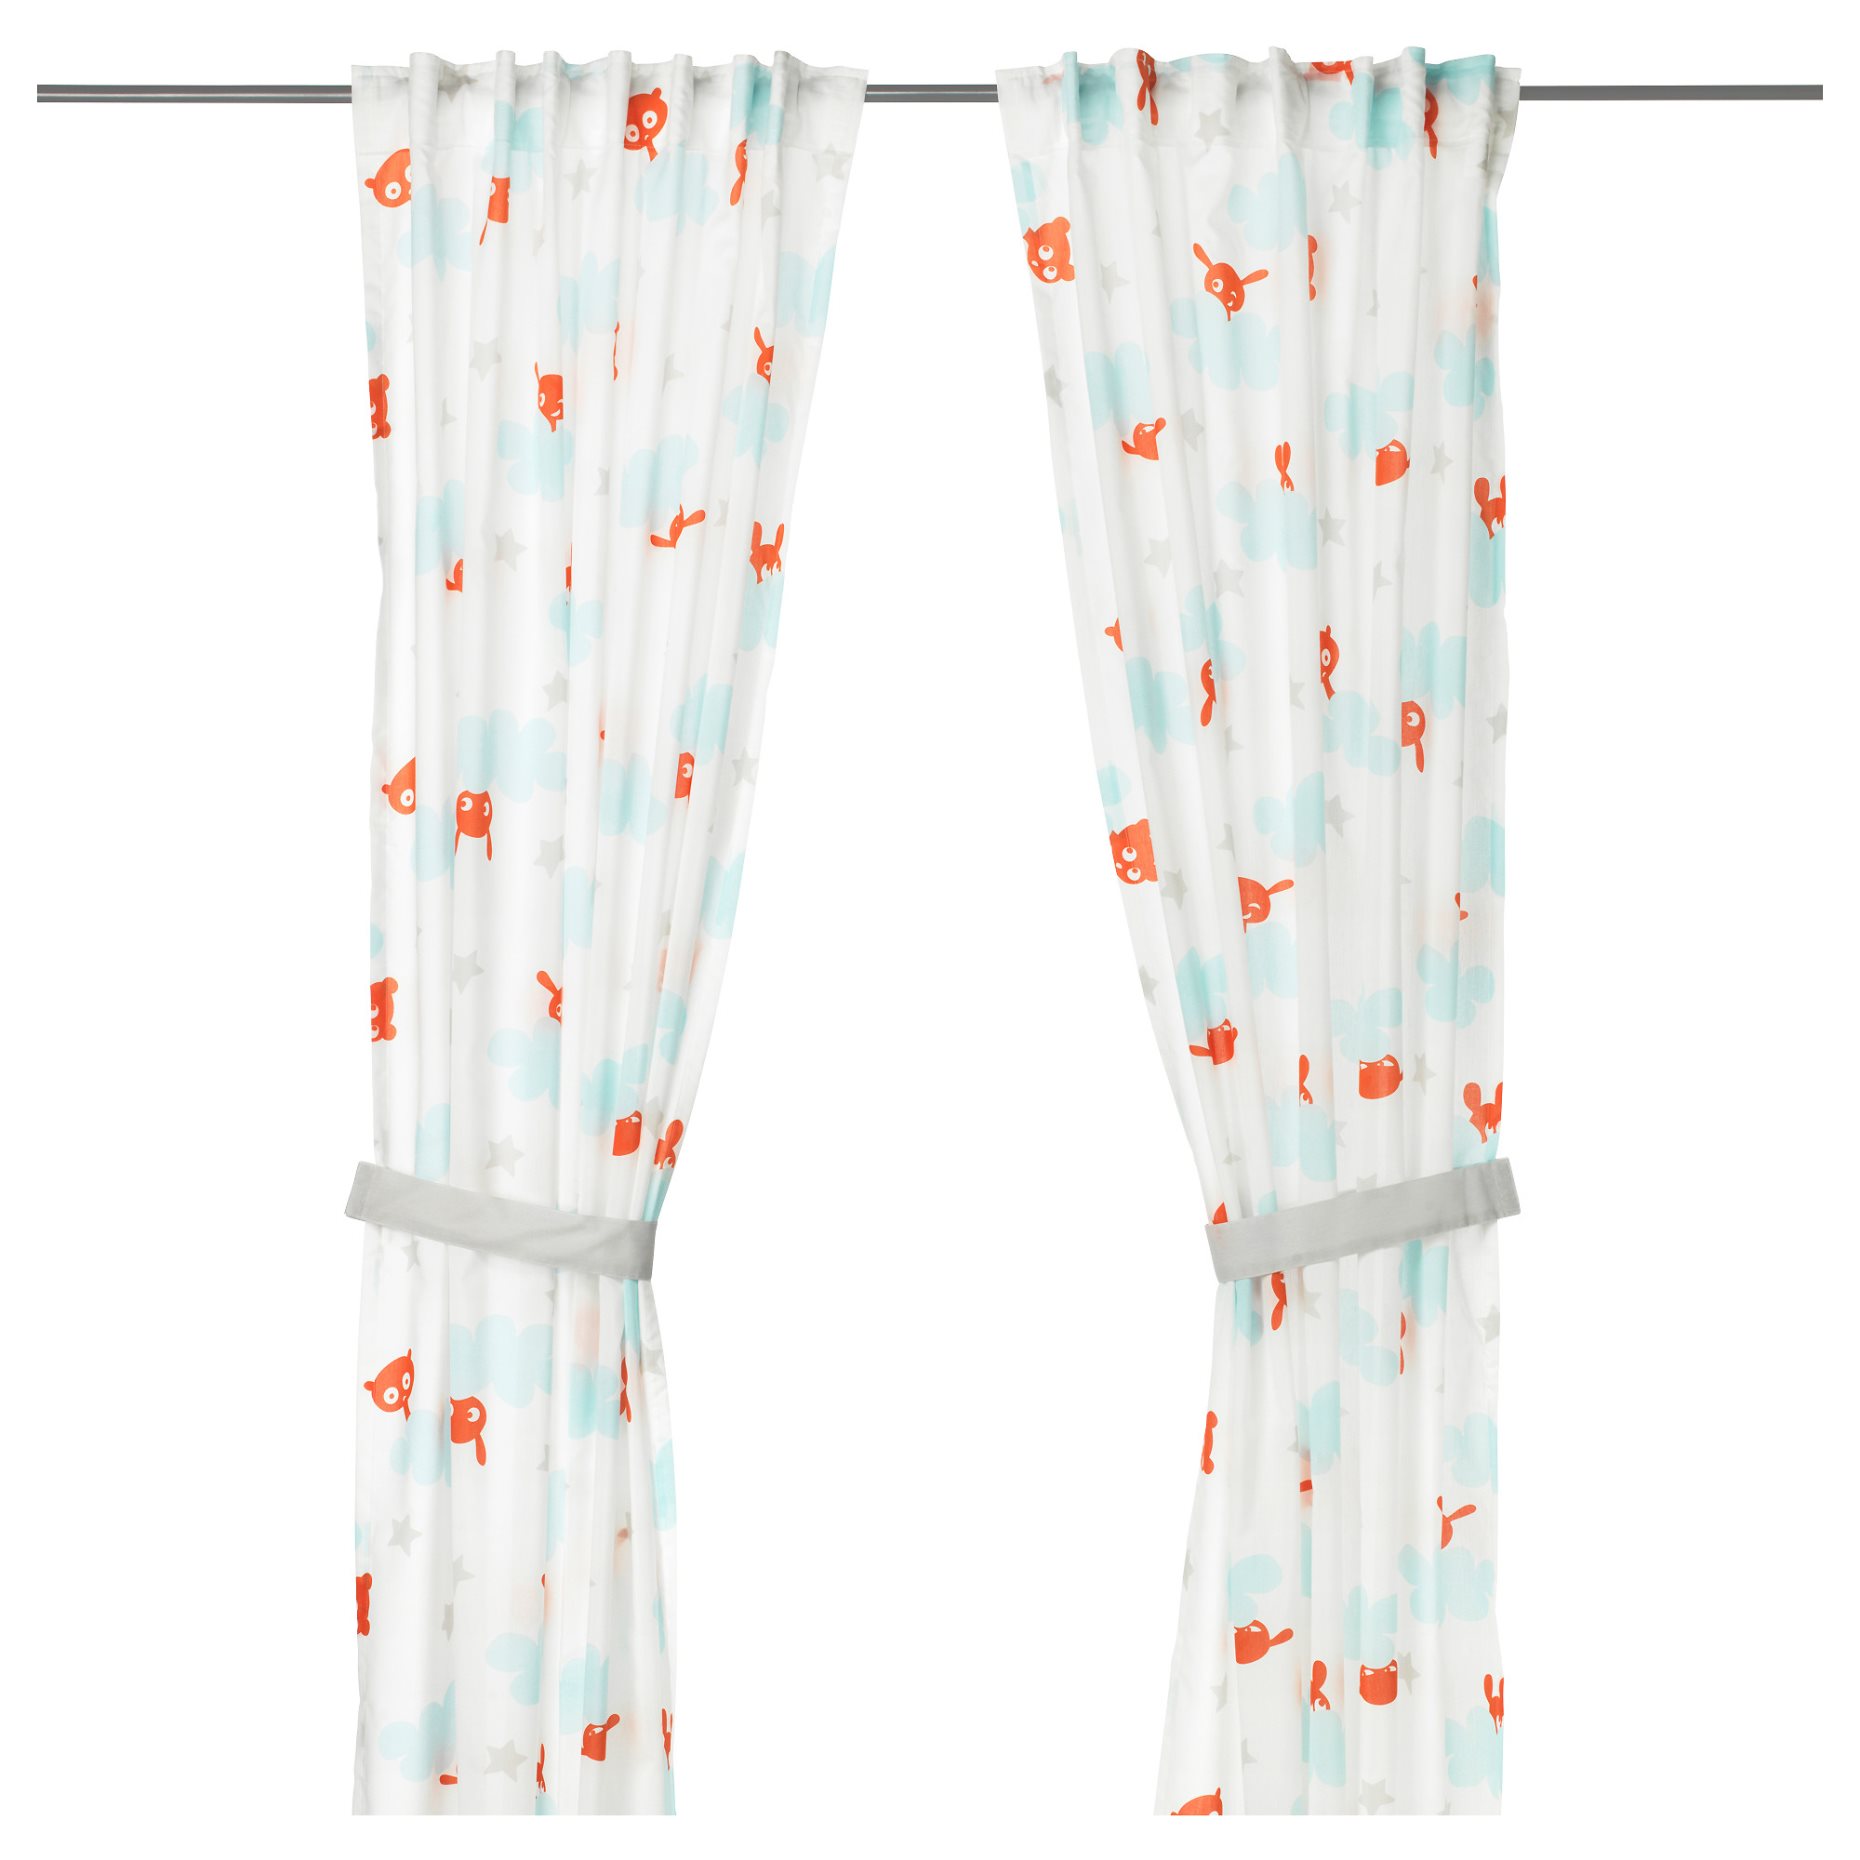 STJÄRNBILD, curtains with tie-backs, 1 pair, 303.196.19